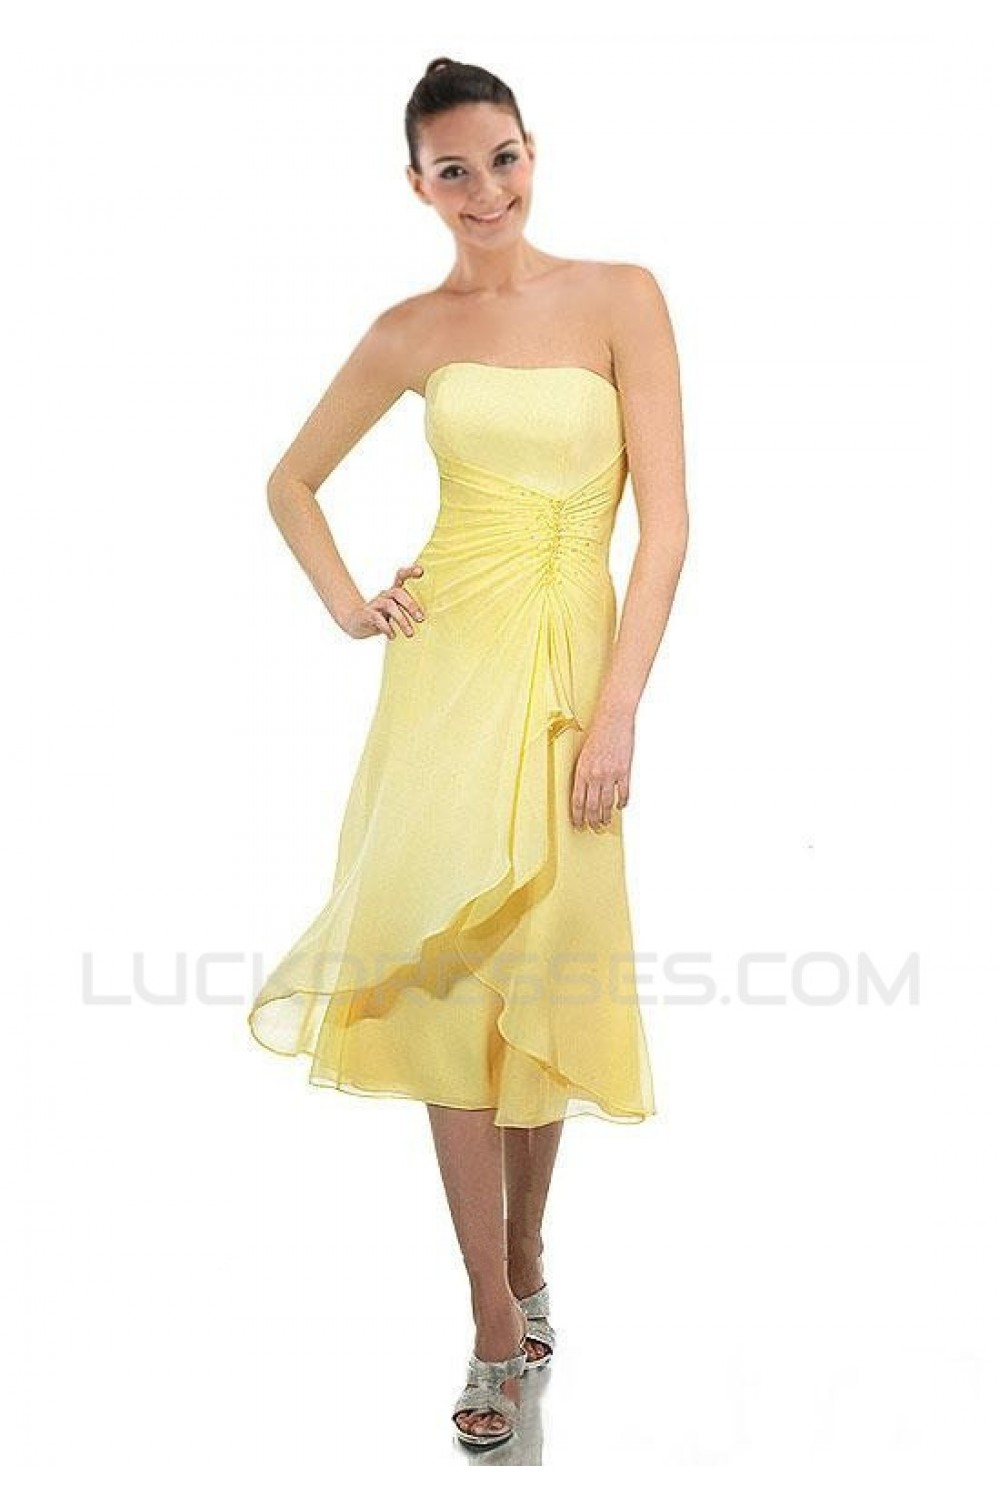 short yellow dresses for weddings